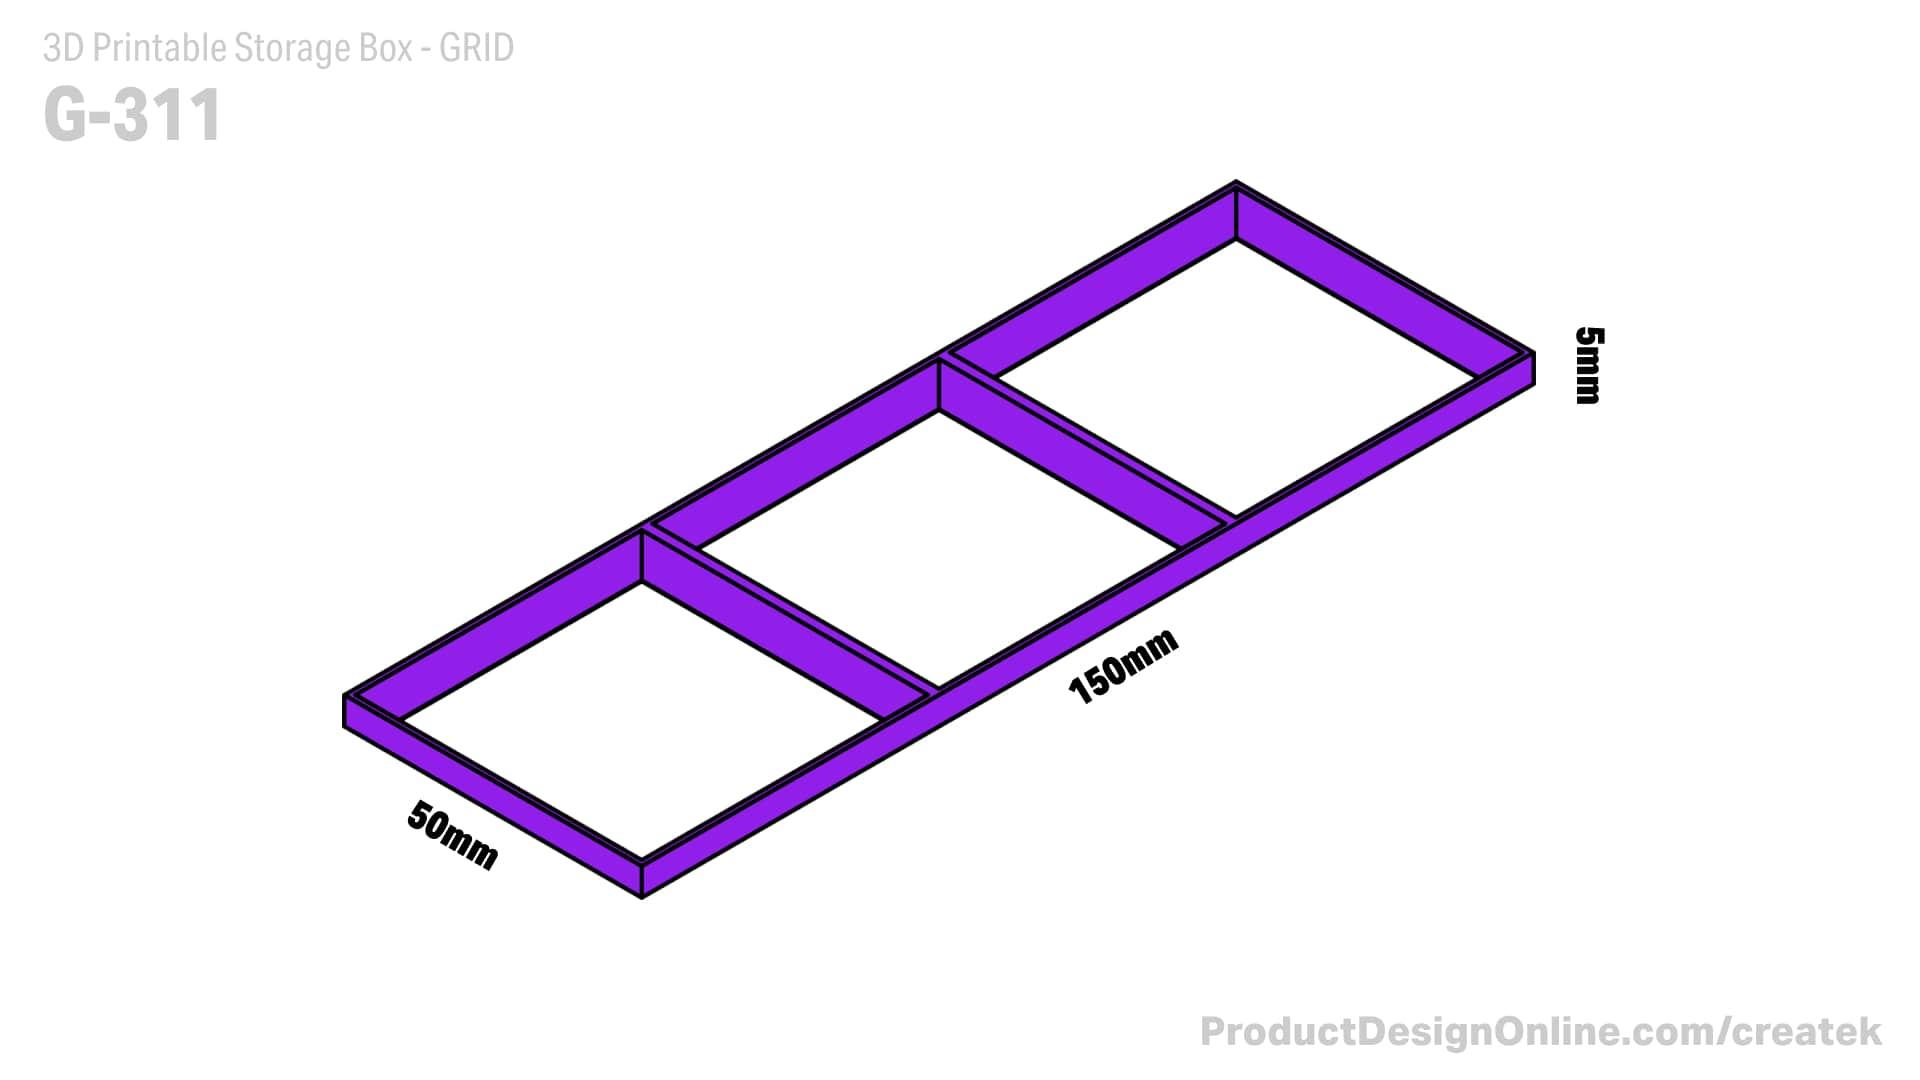 GRID for CREATEK 3D Printable Storage Boxes (STL) 3d model